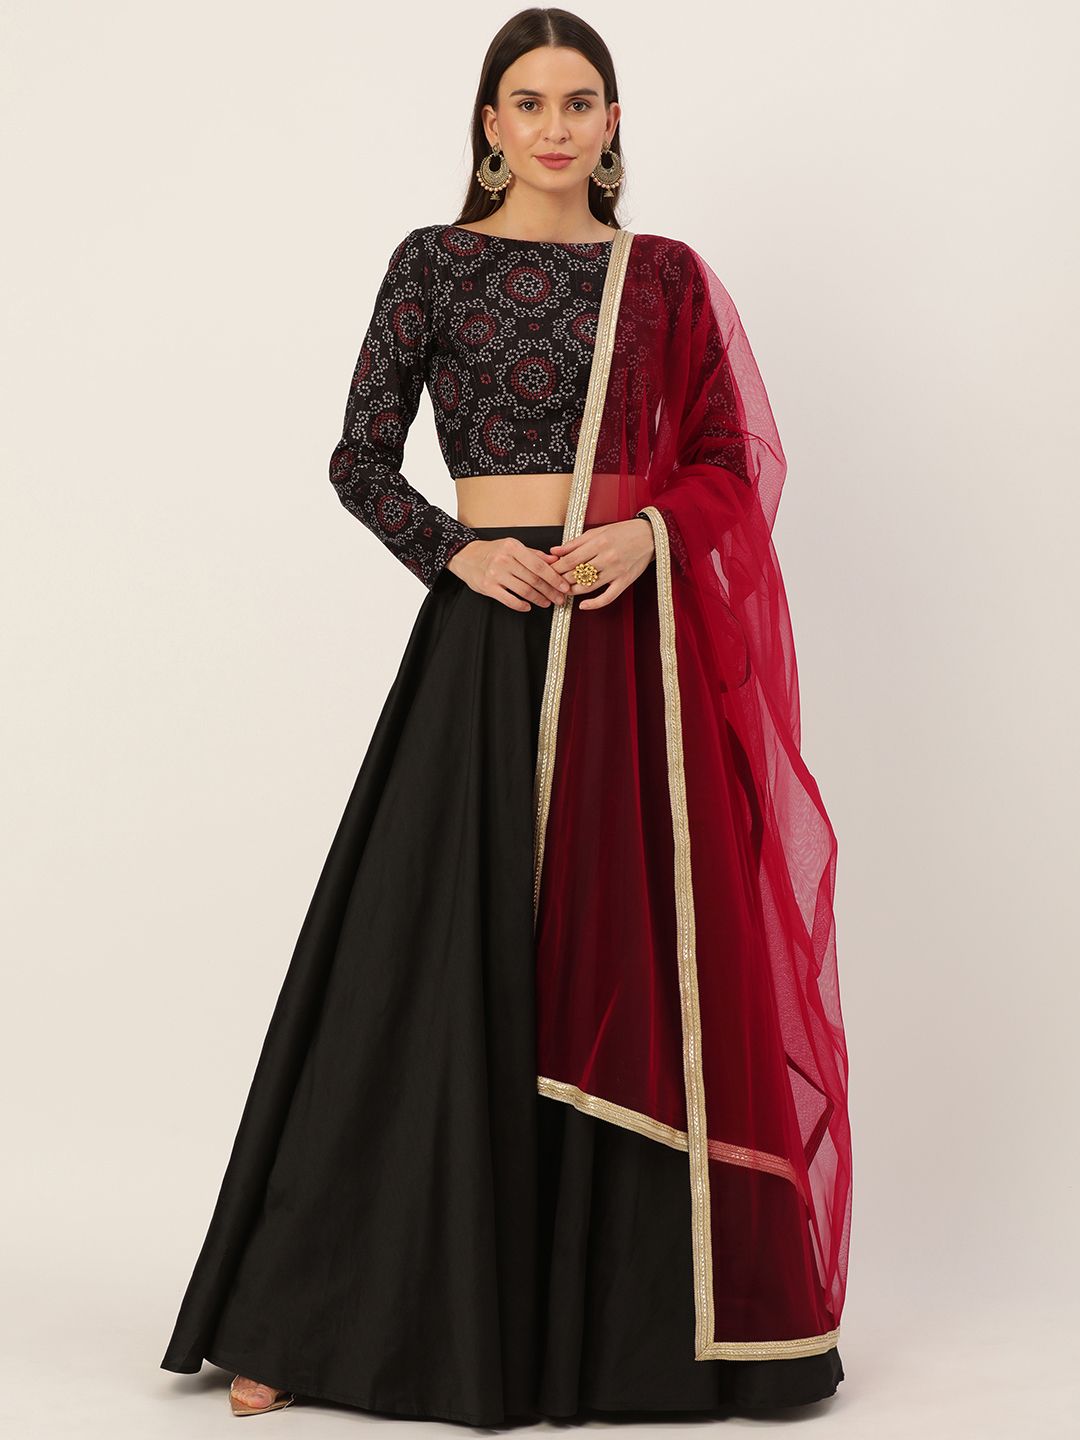 EthnoVogue Black & Red Digital Printed Made to Measure Lehenga & Blouse With Dupatta Price in India